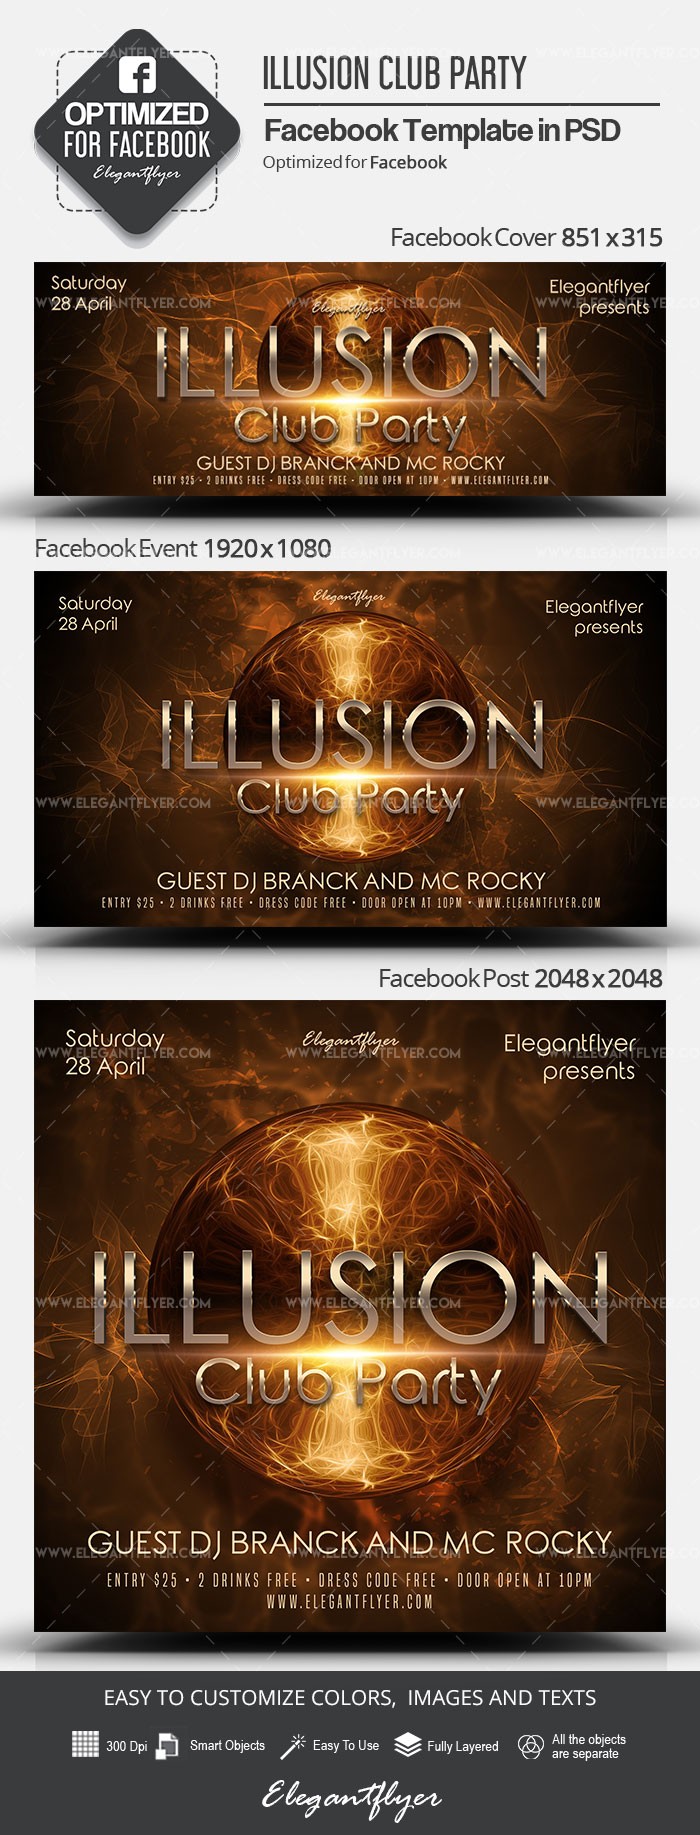 Impreza klubowa Illusion na Facebooku. by ElegantFlyer